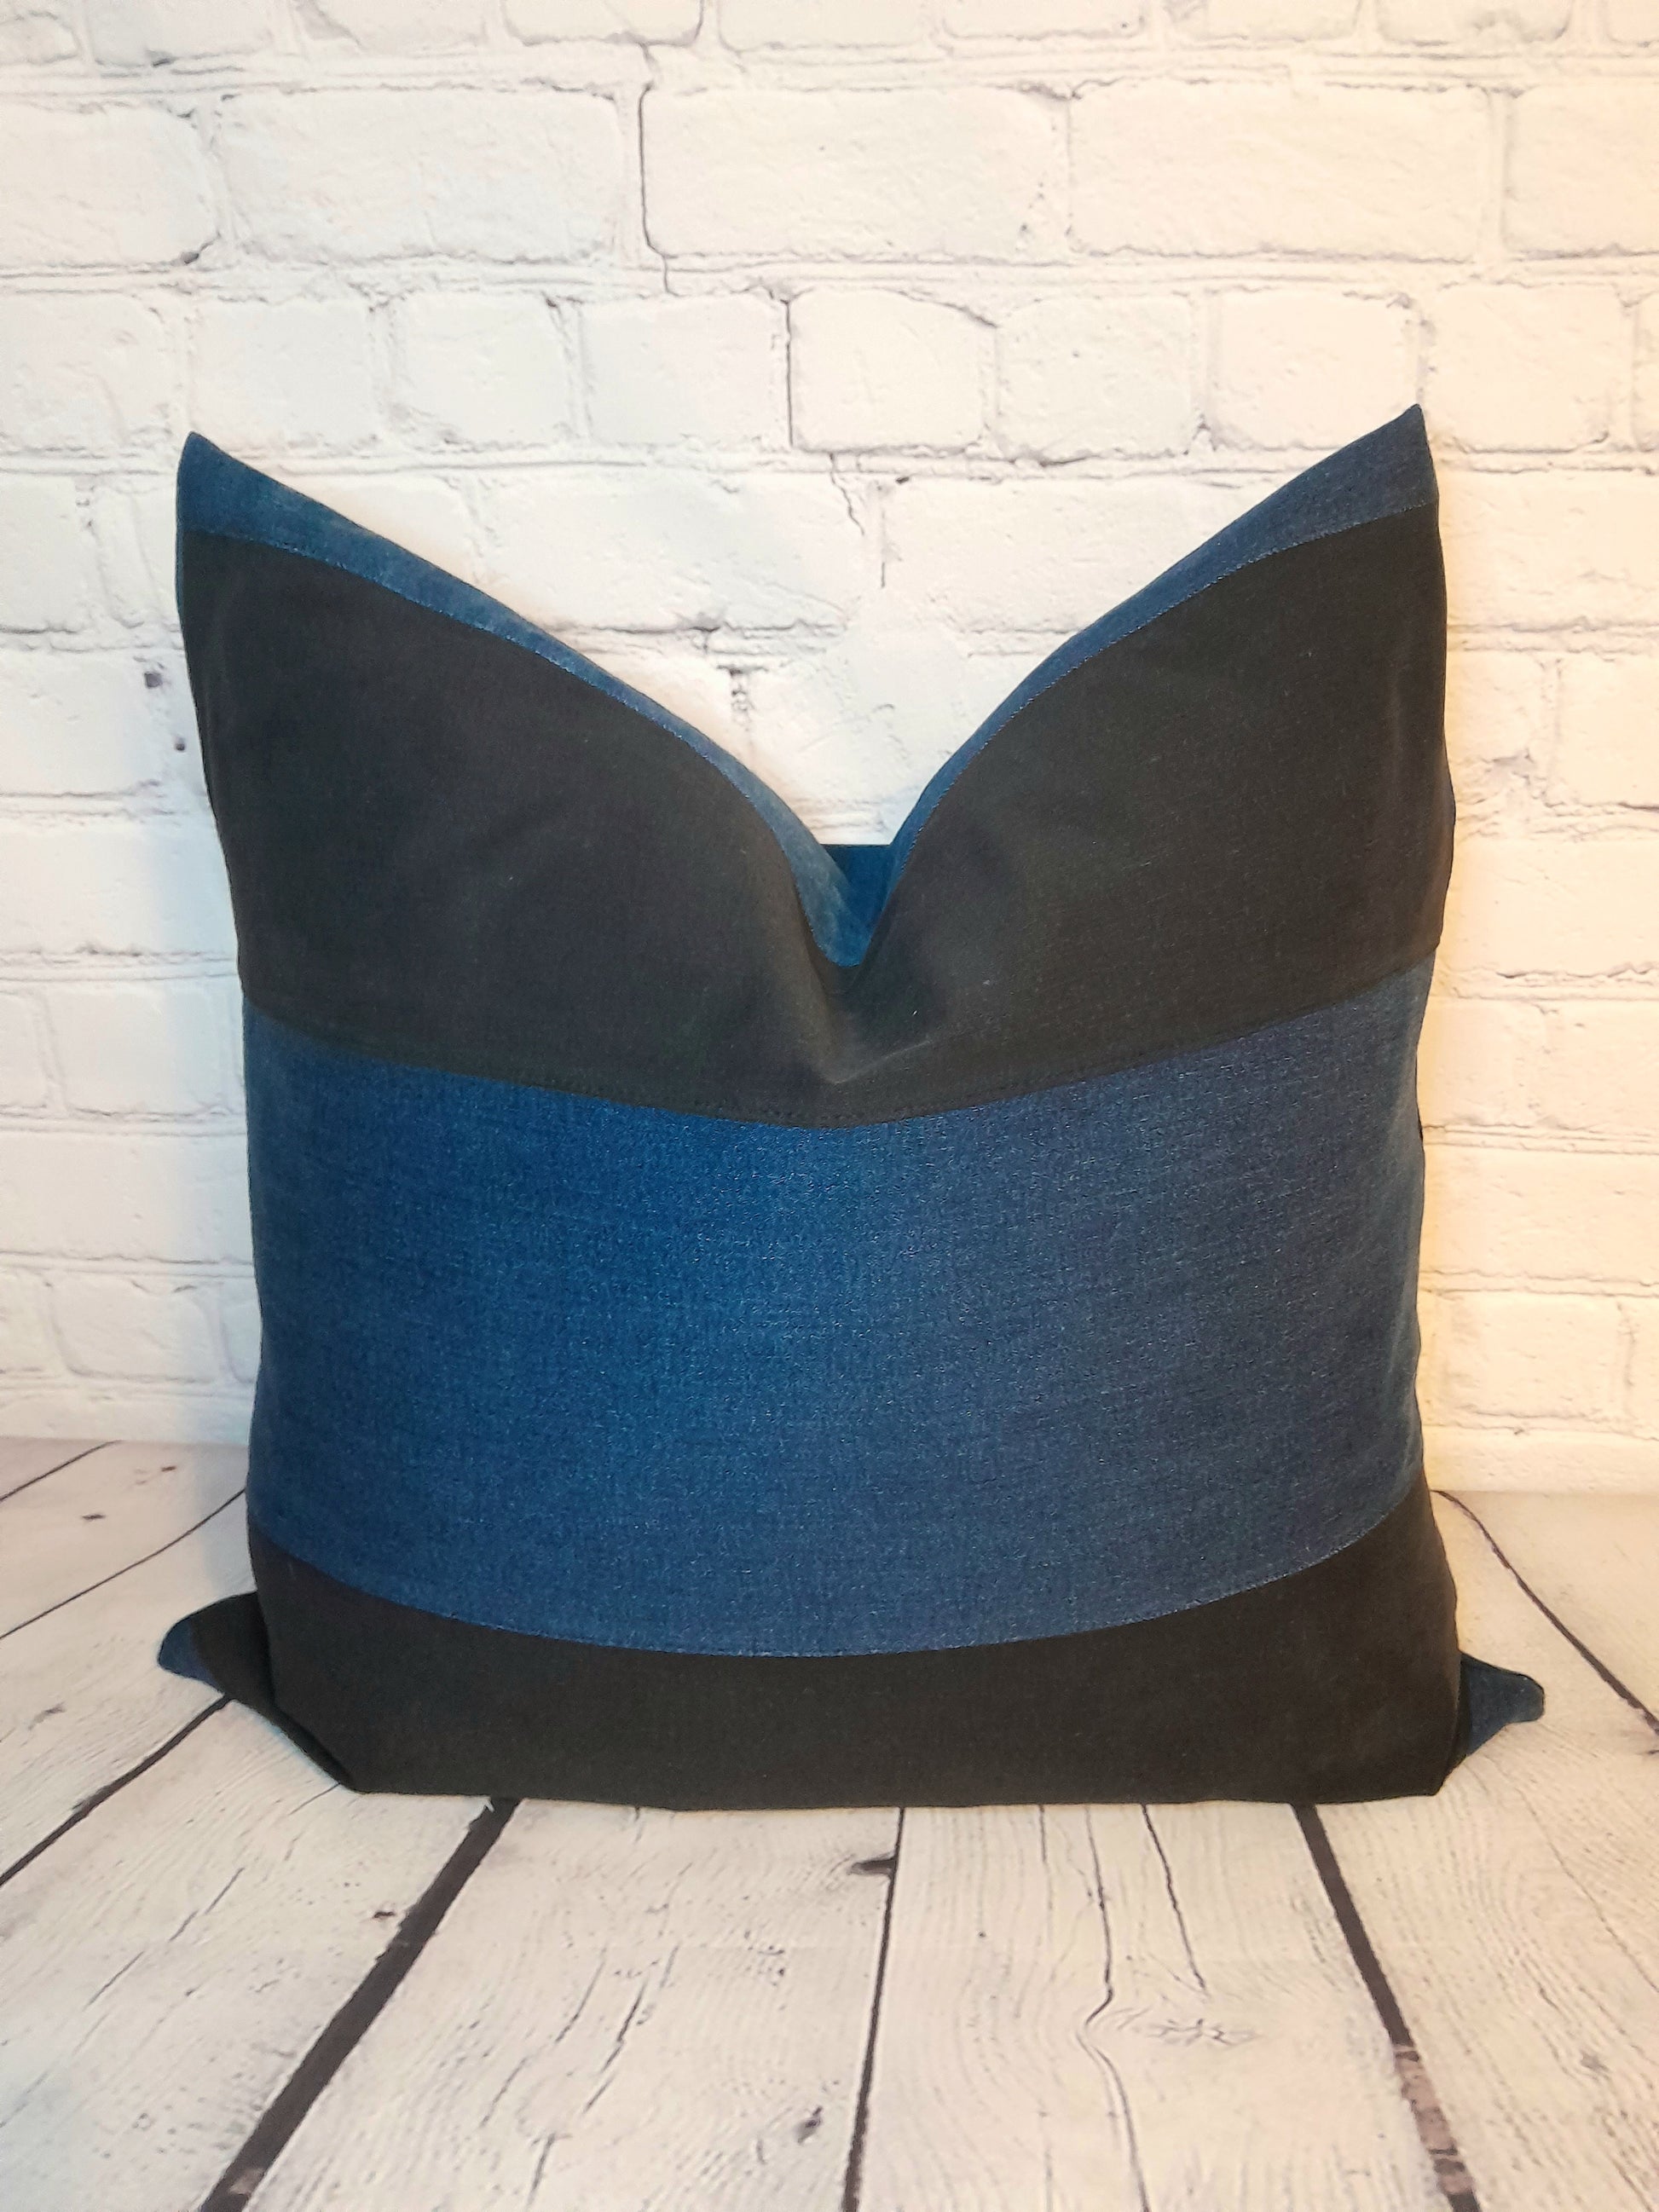 Denim stripe cushion, pillow in blue and black